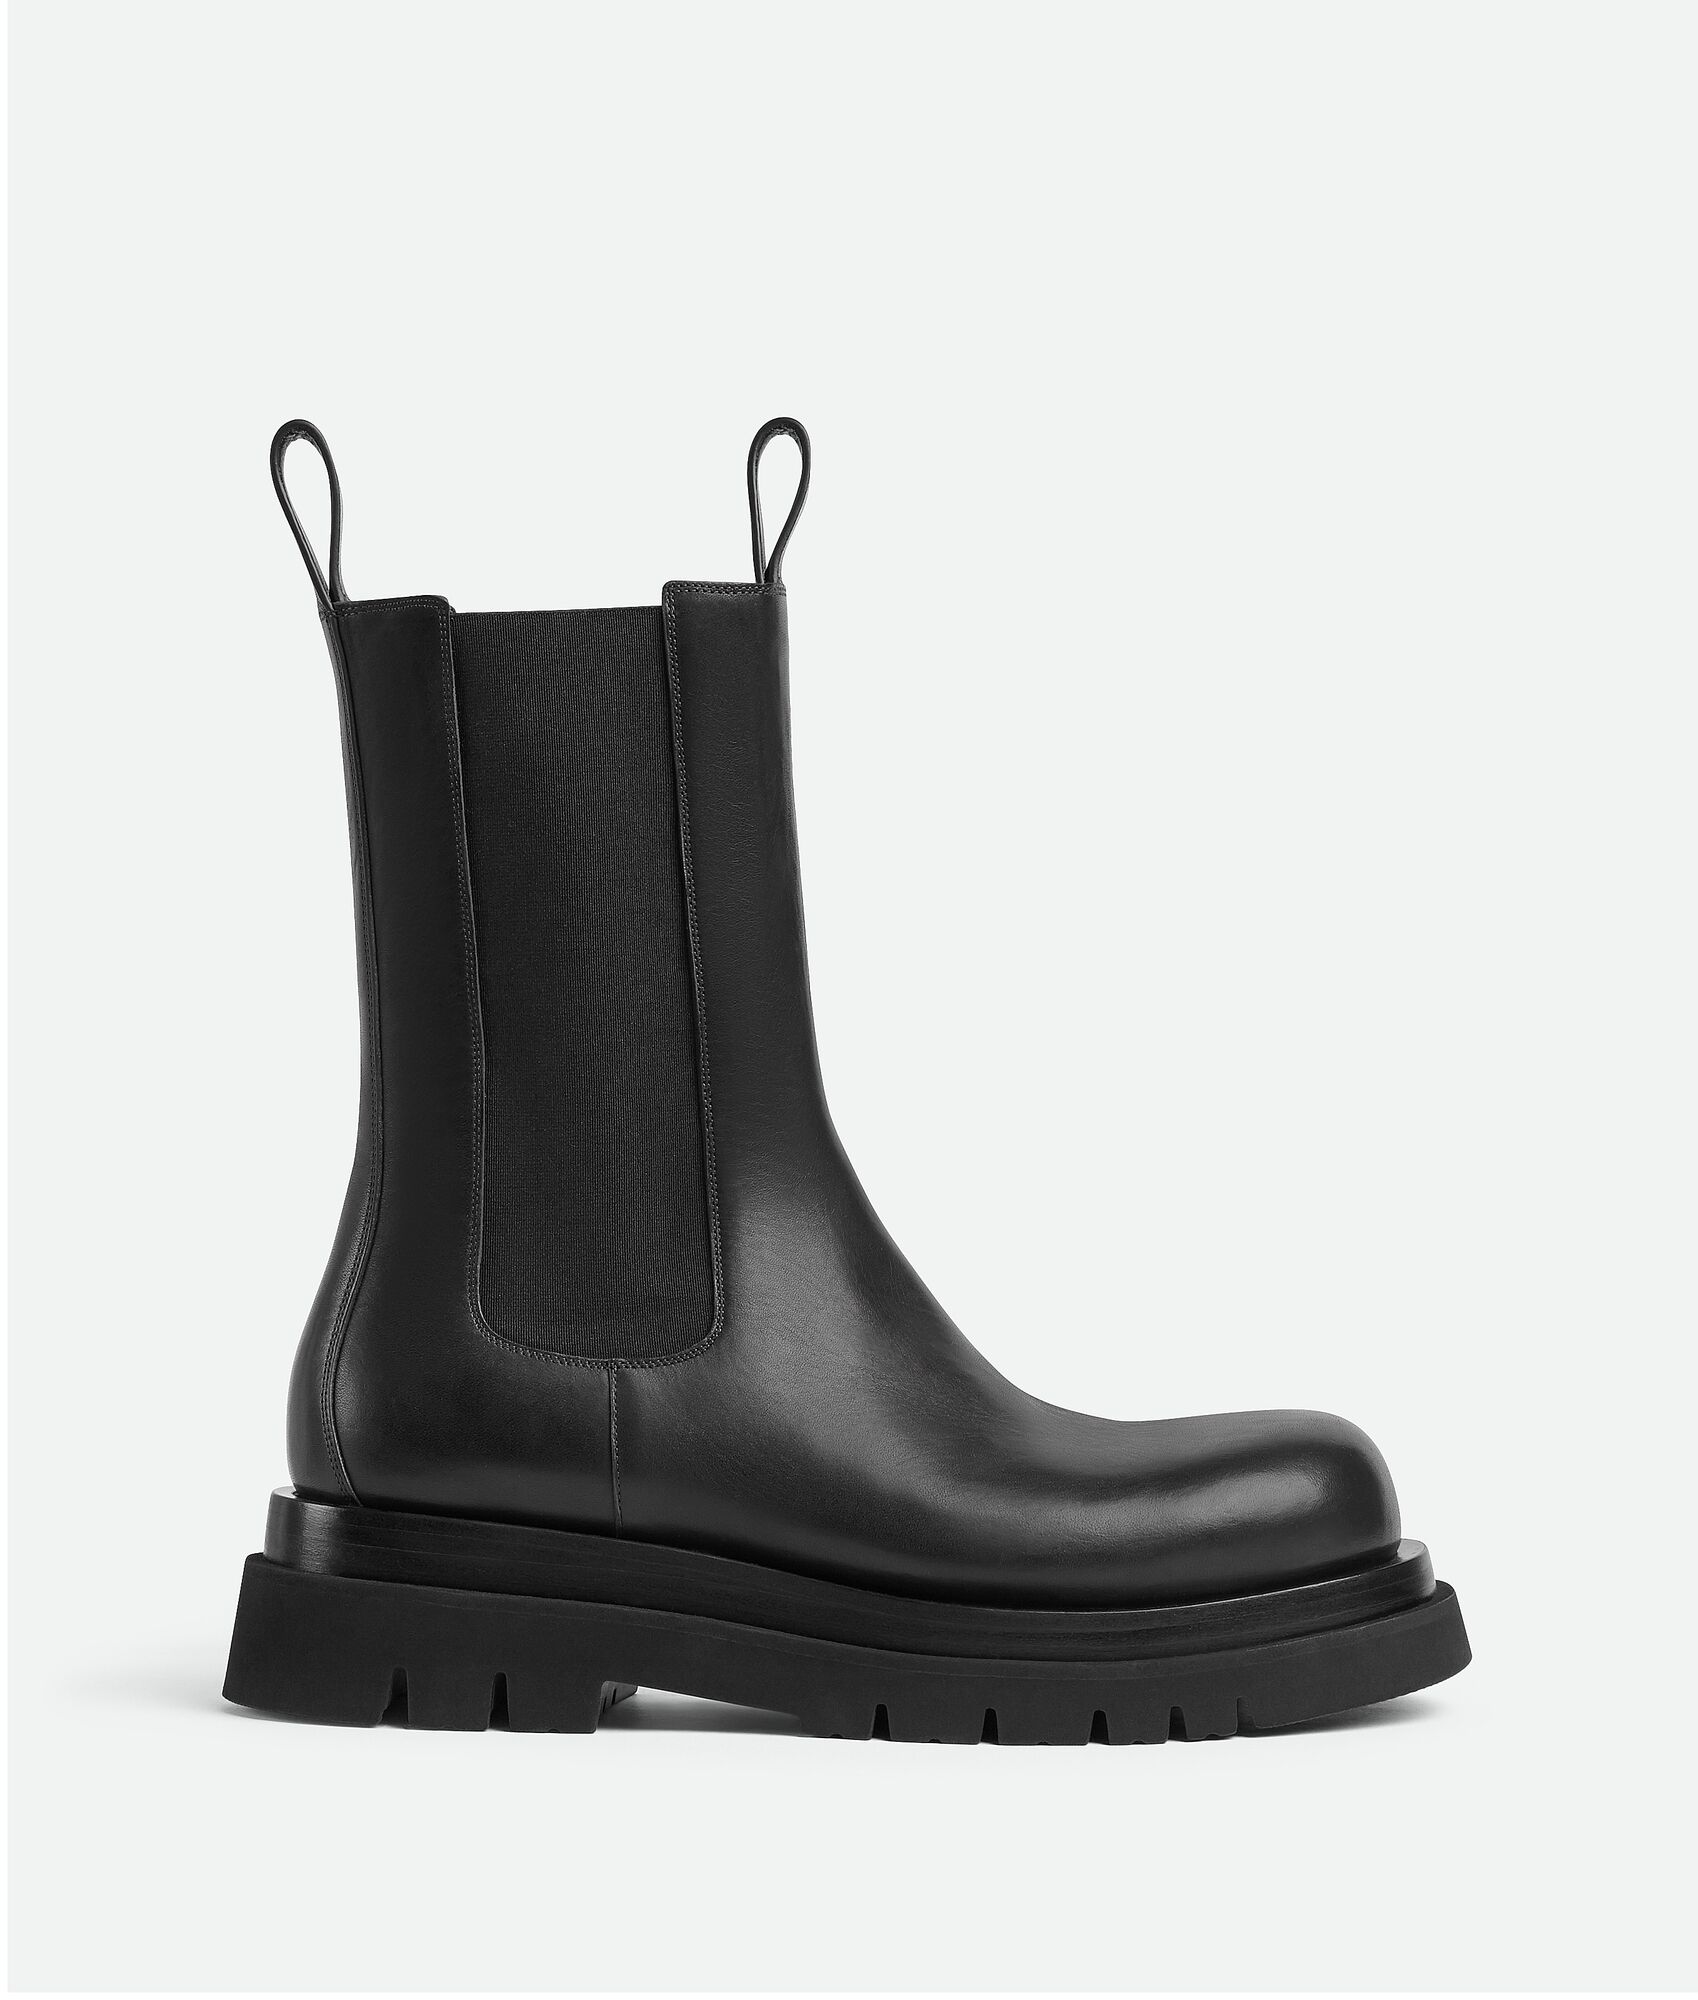 Bottega Veneta® Men's Puddle Ankle Boot in Sea Salt. Shop online now.